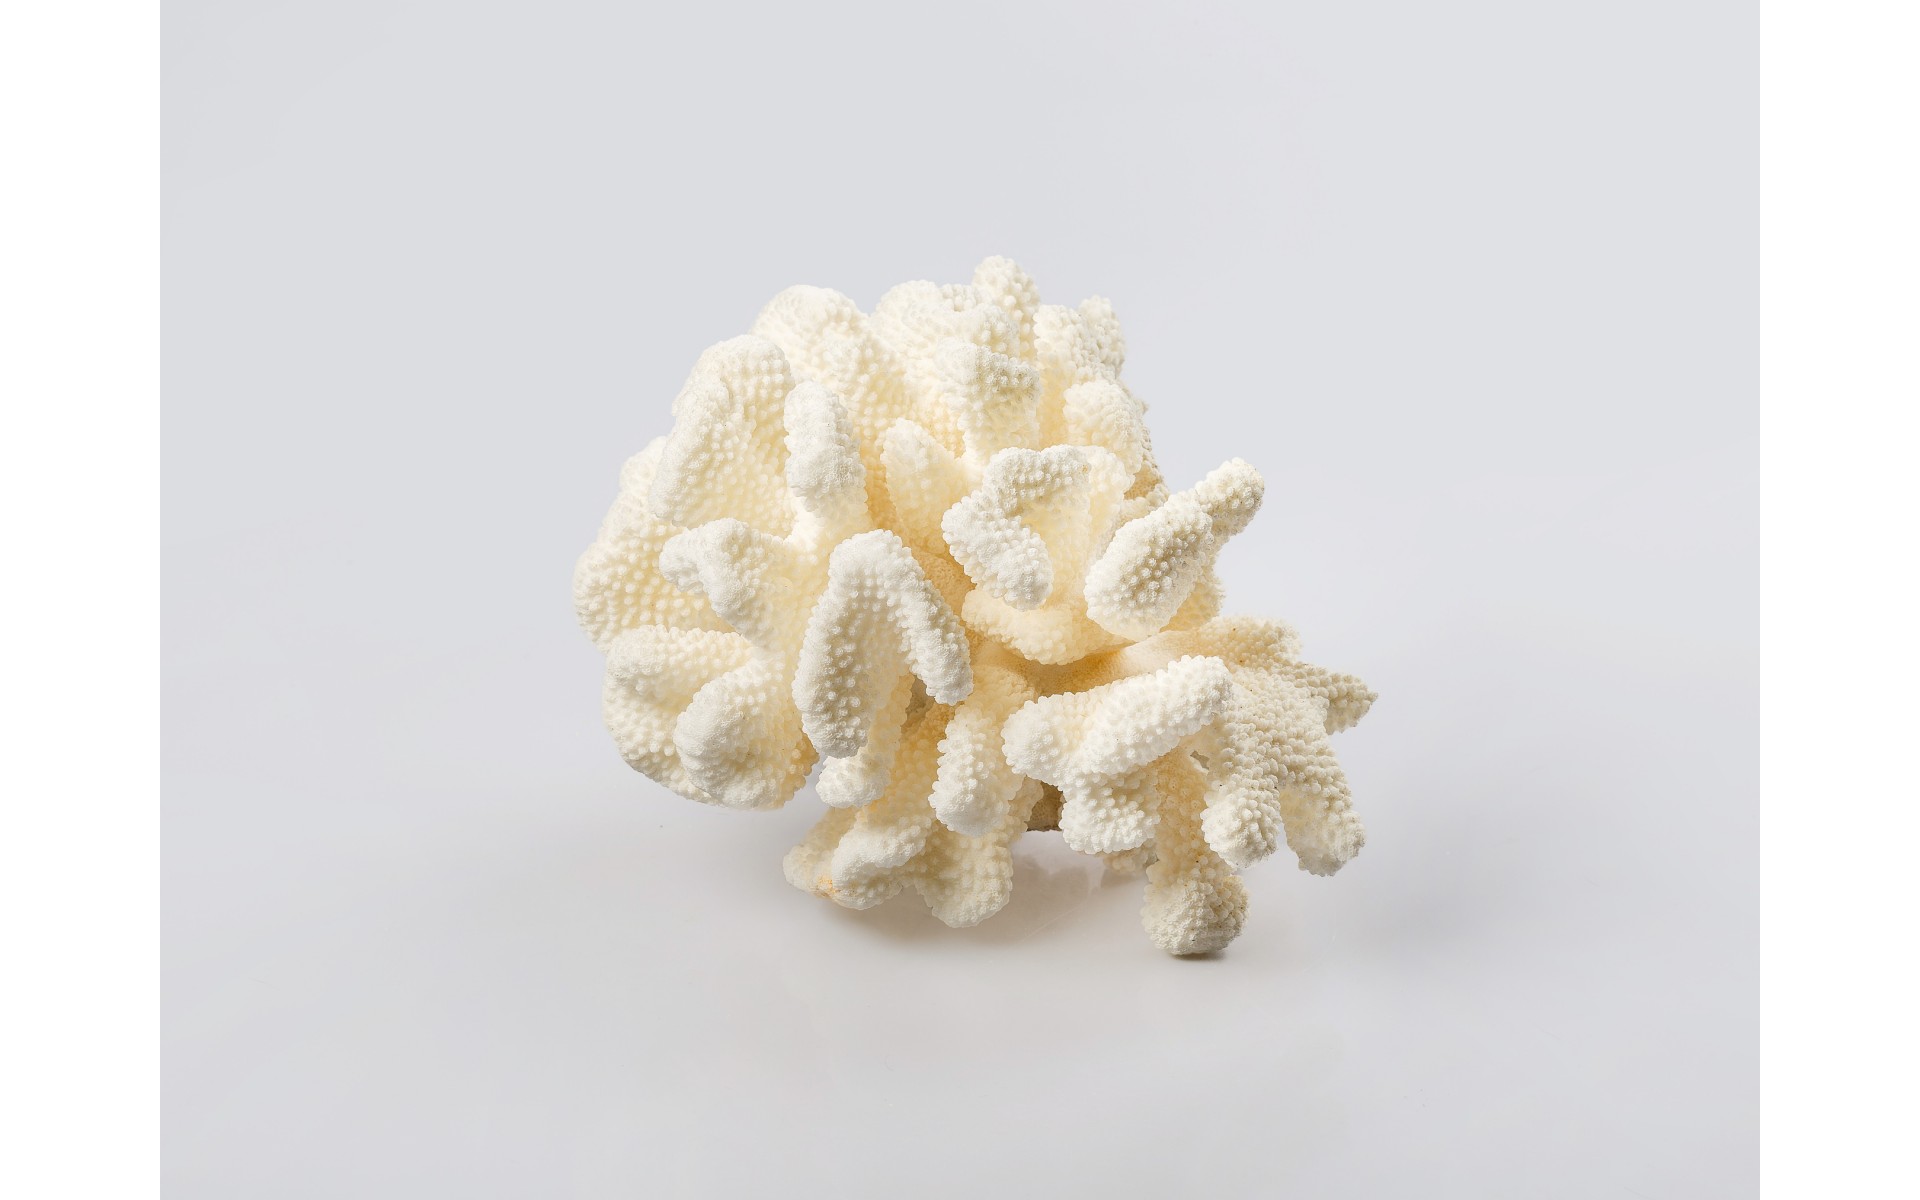 Cauliflower Coral Pamper Gift Box with vanilla